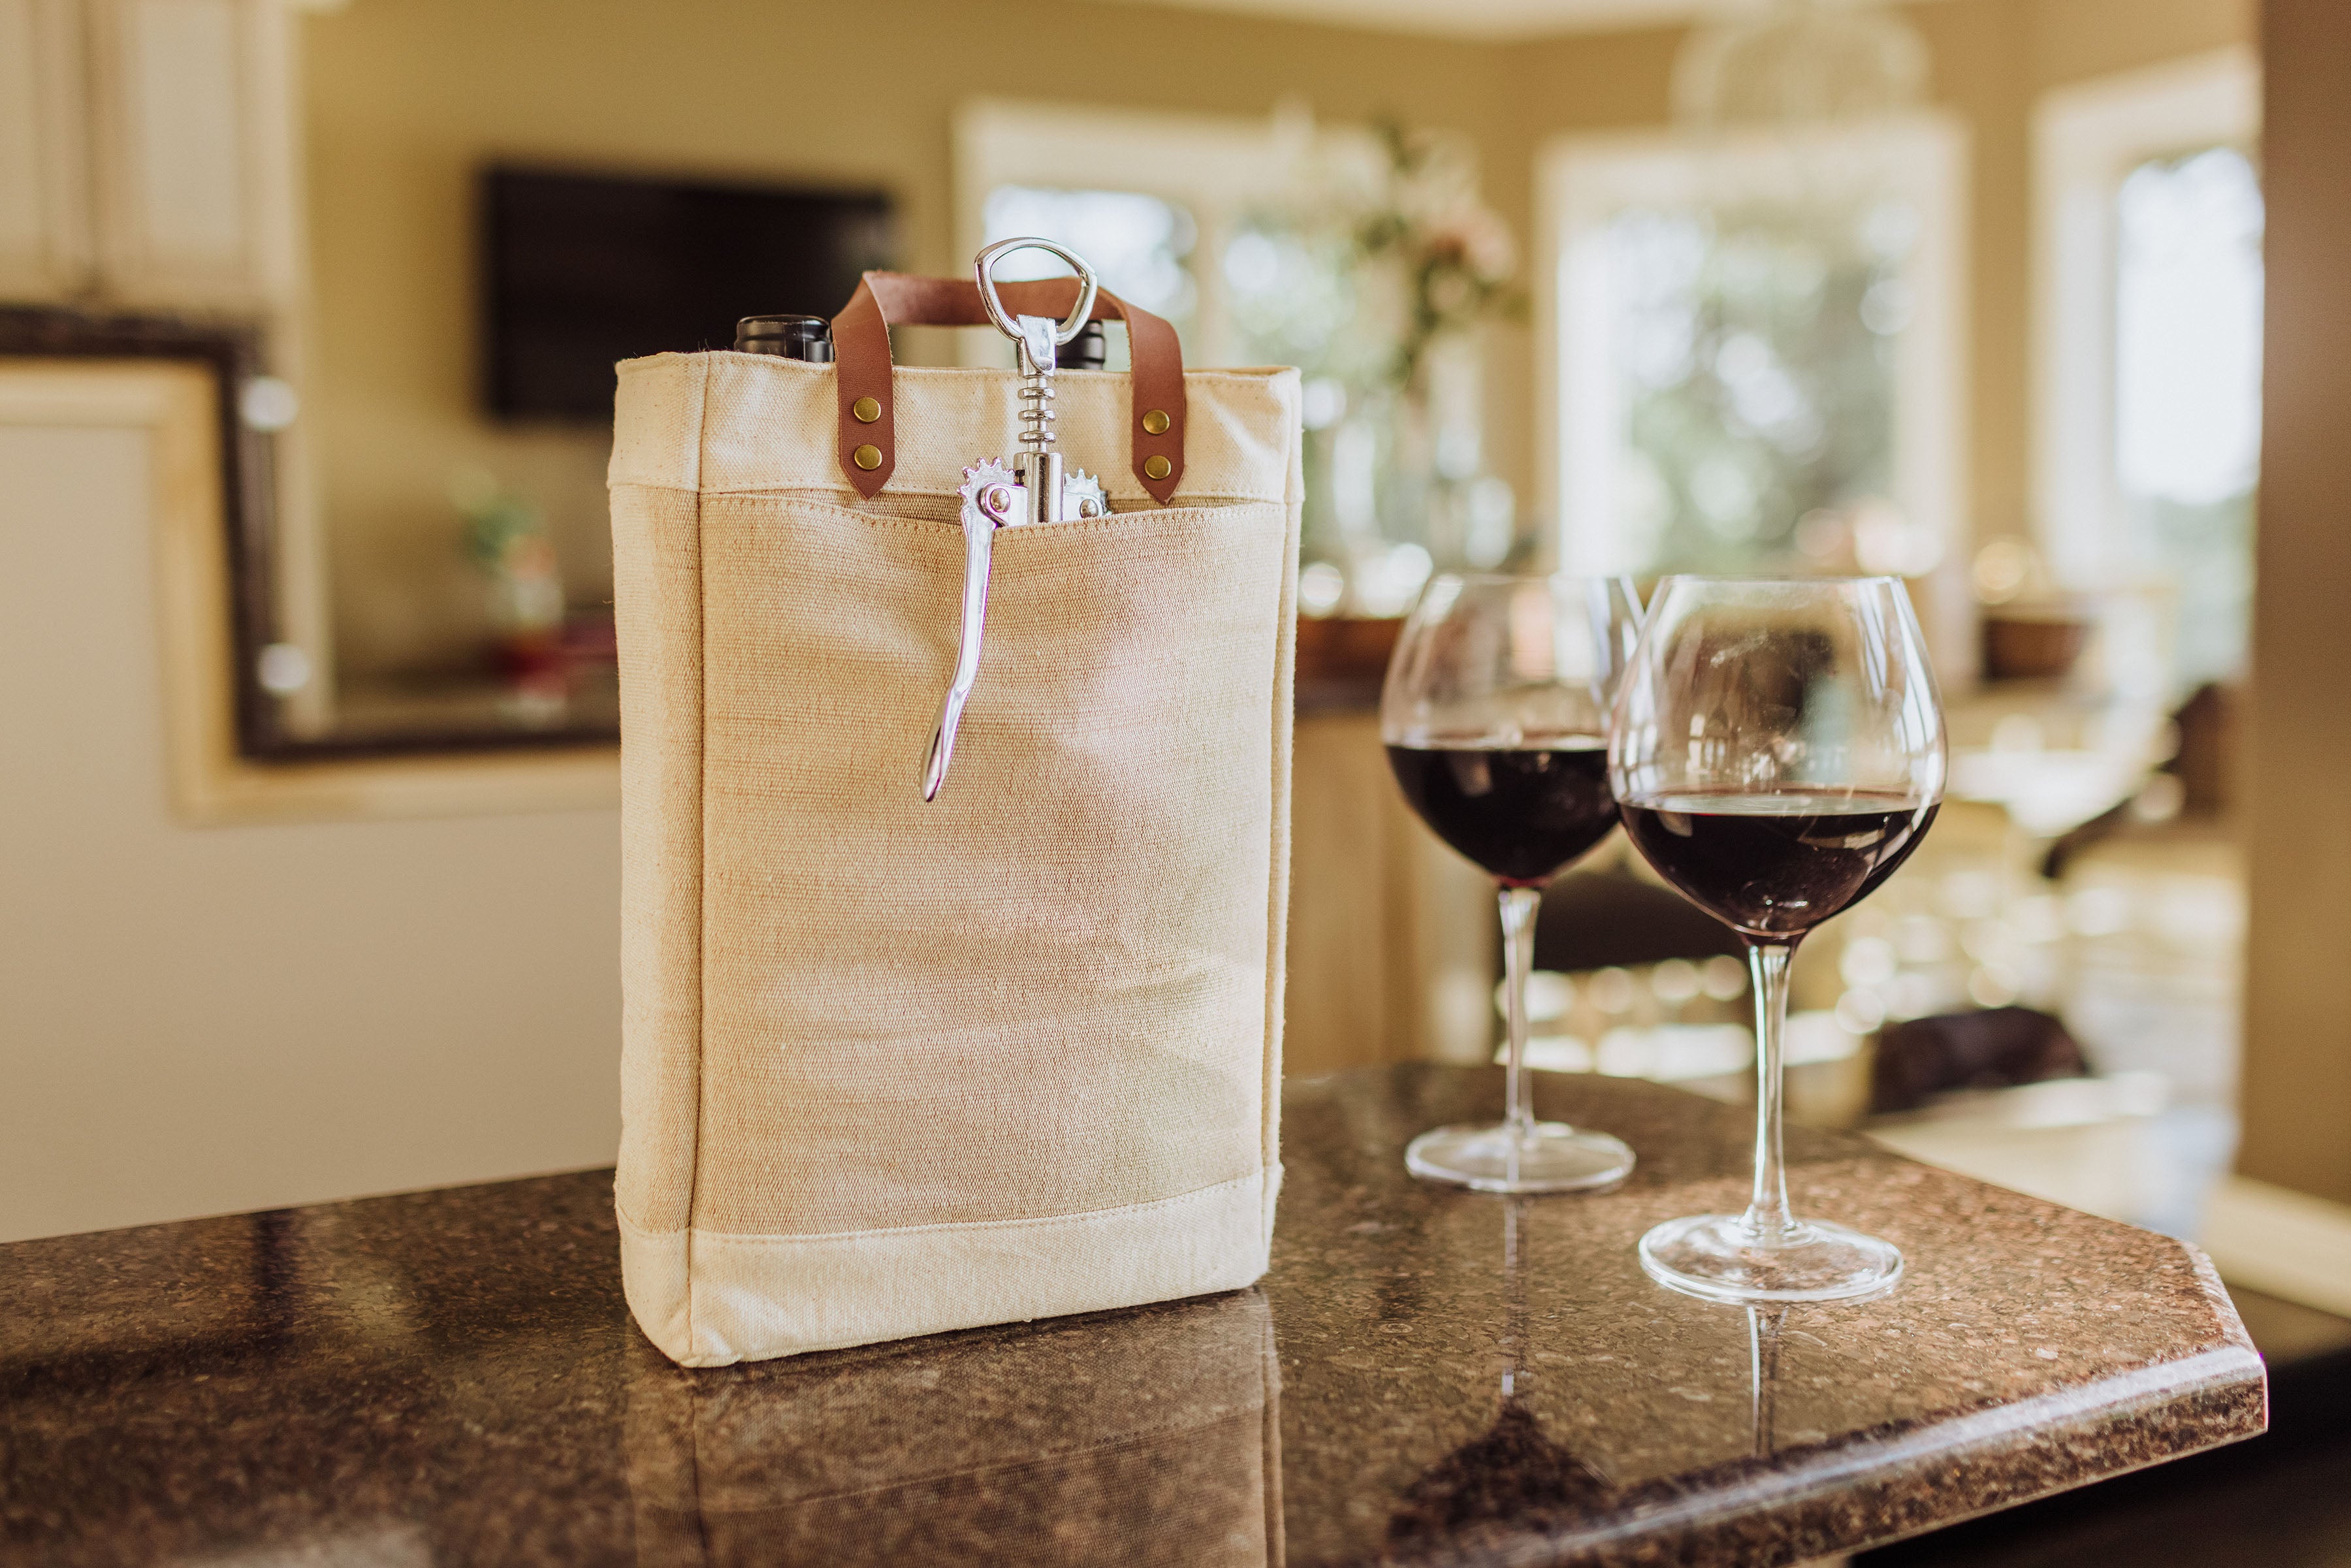 Arizona Cardinals - Pinot Jute 2 Bottle Insulated Wine Bag